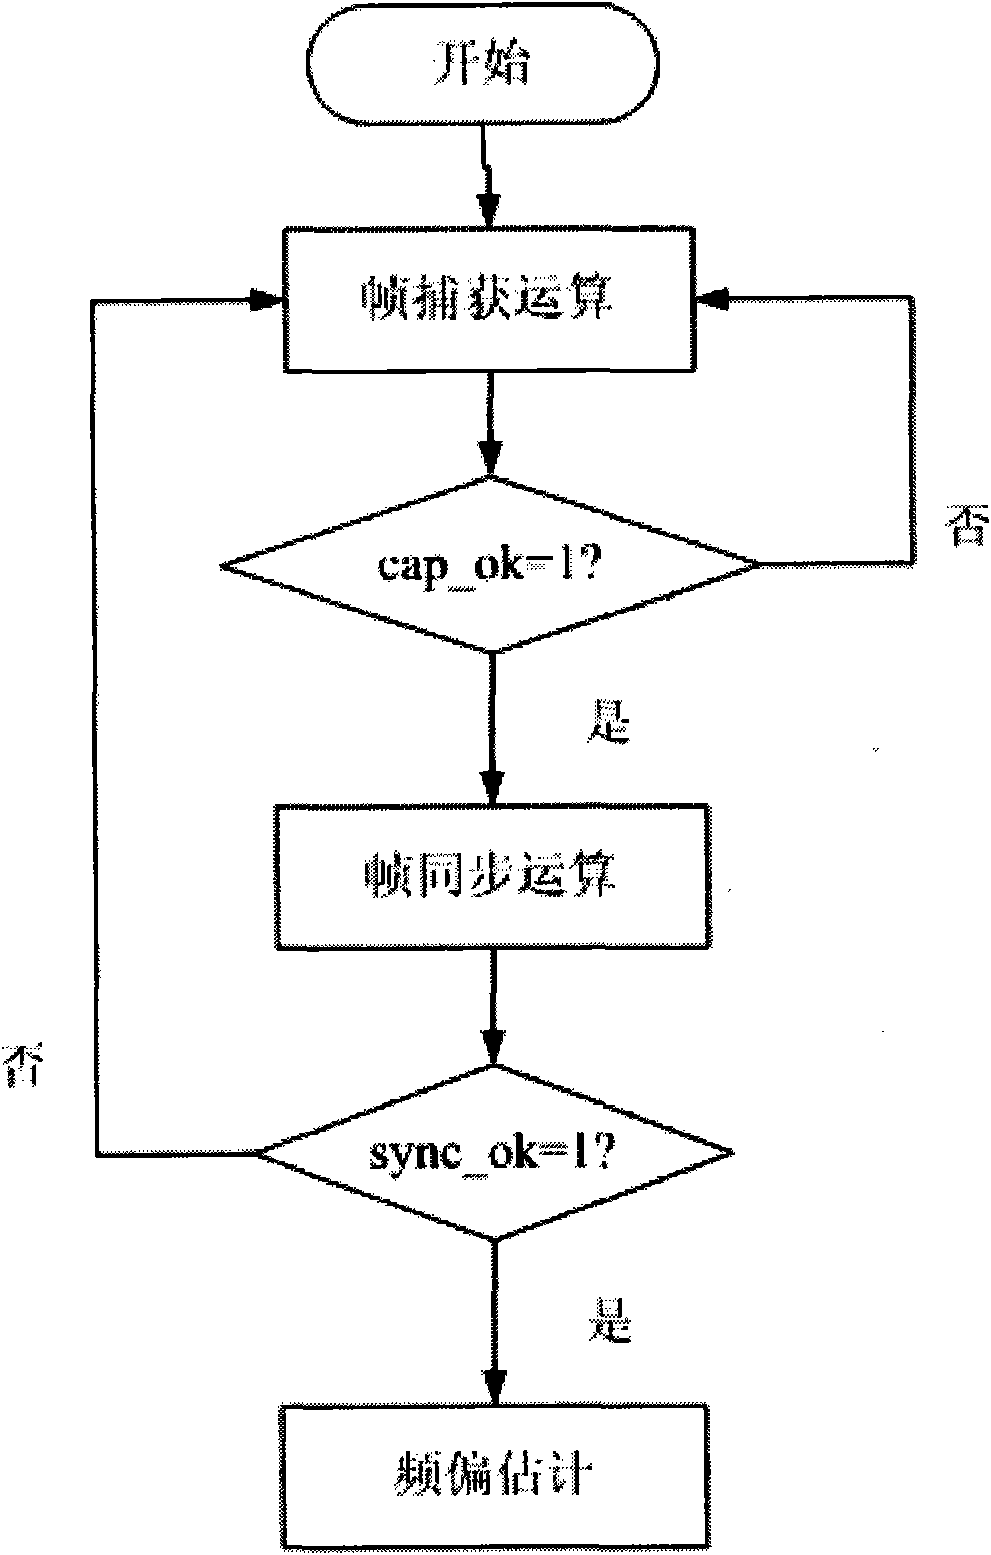 Synchronization method of orthogonal frequency division multiplexing-ultra wideband (OFDM-UWB) system based on peak detection